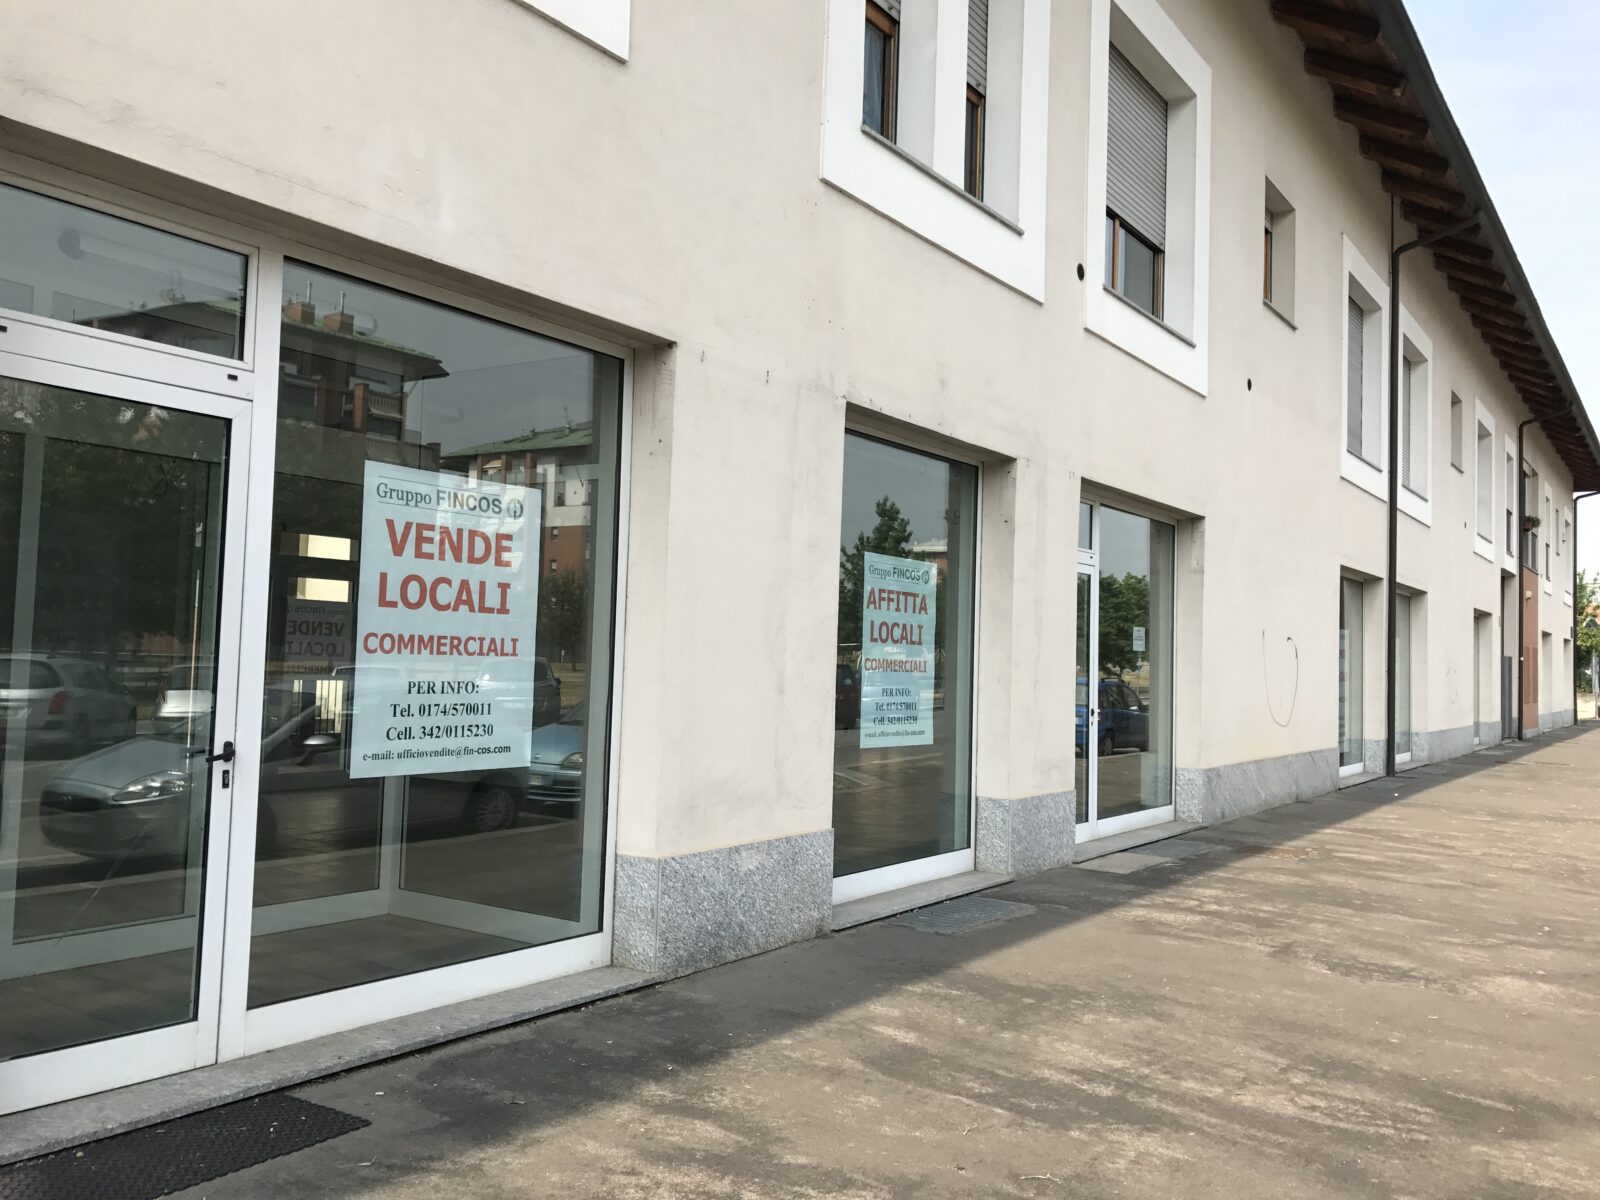 Torino Mirafiori – commercial premises with shop windows